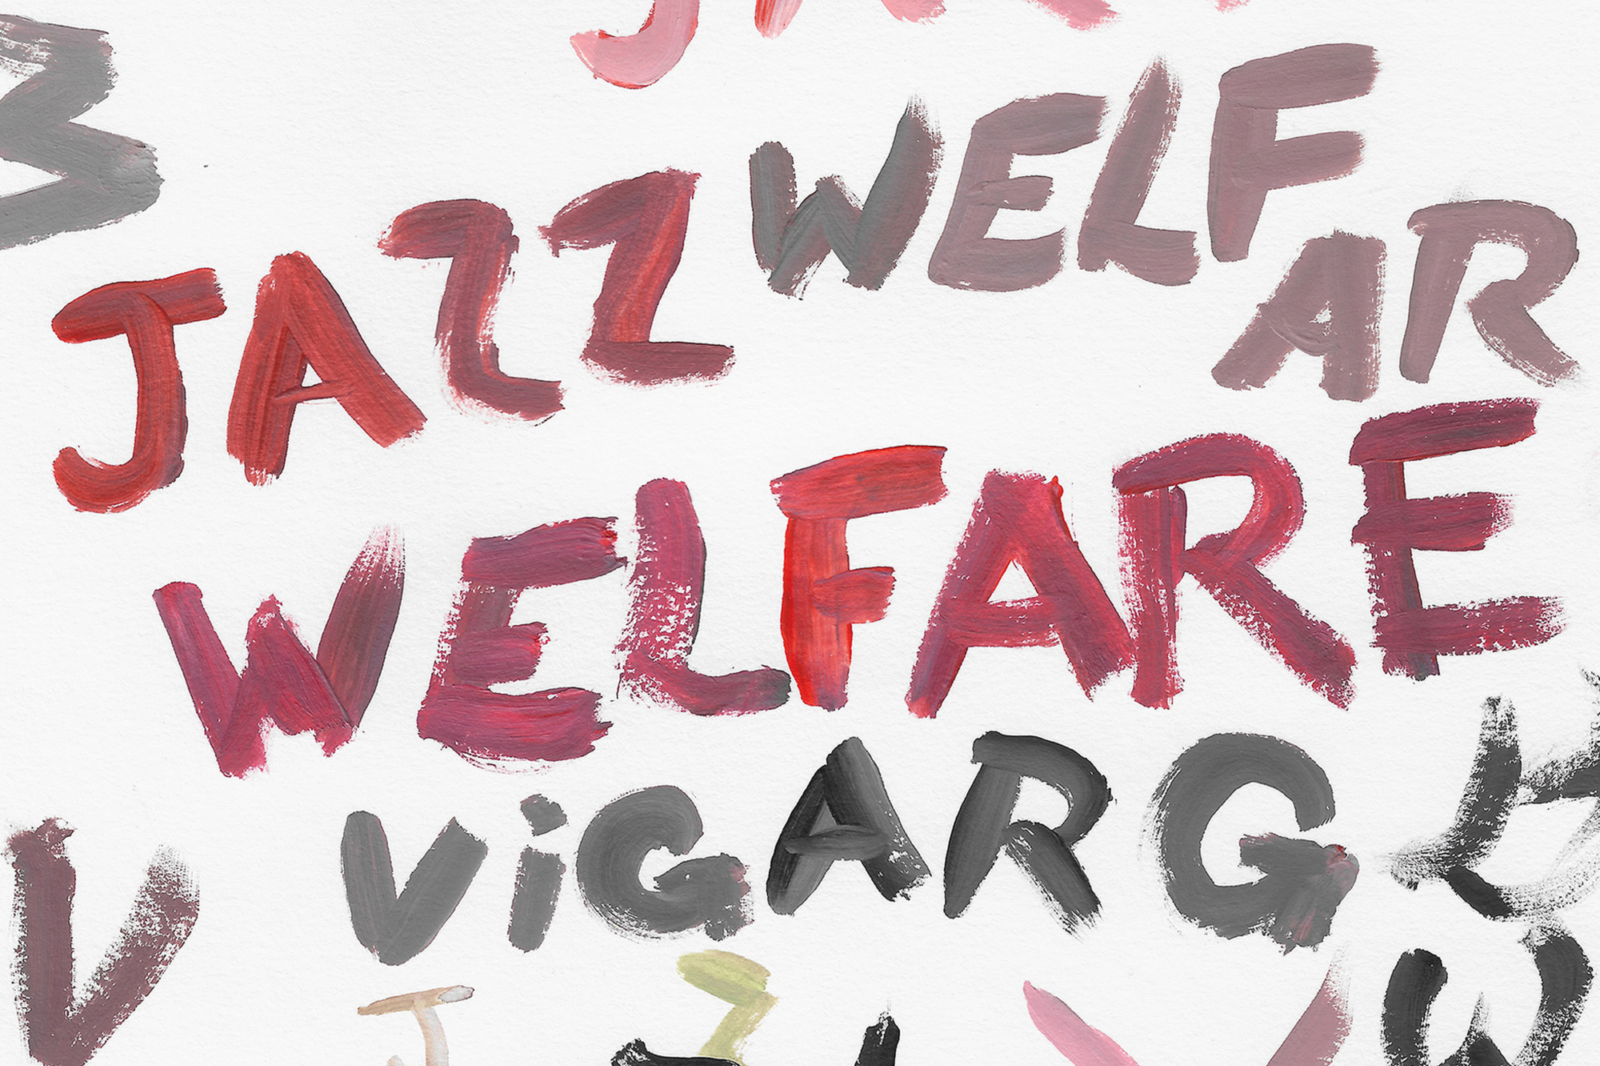 Viagra Boys - Welfare Jazz